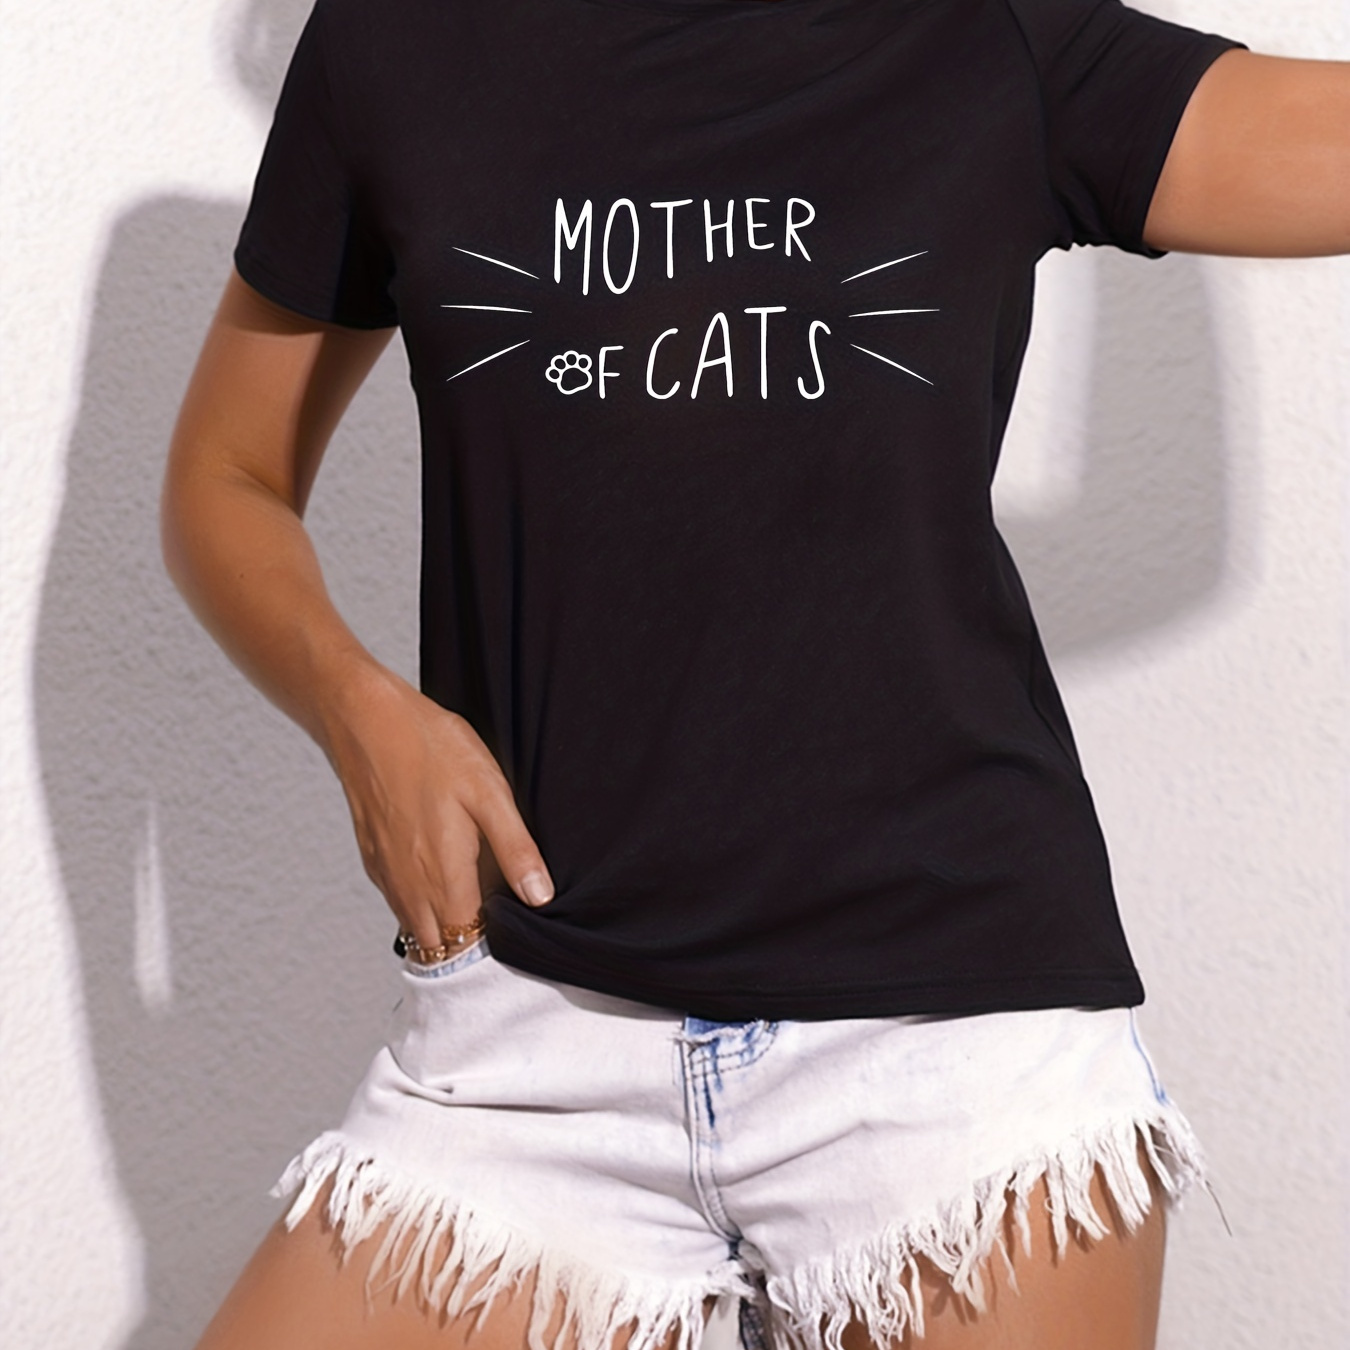 

Cat Mother Print Crew Neck T-shirt, Casual Short Sleeve Summer Top, Women's Clothing